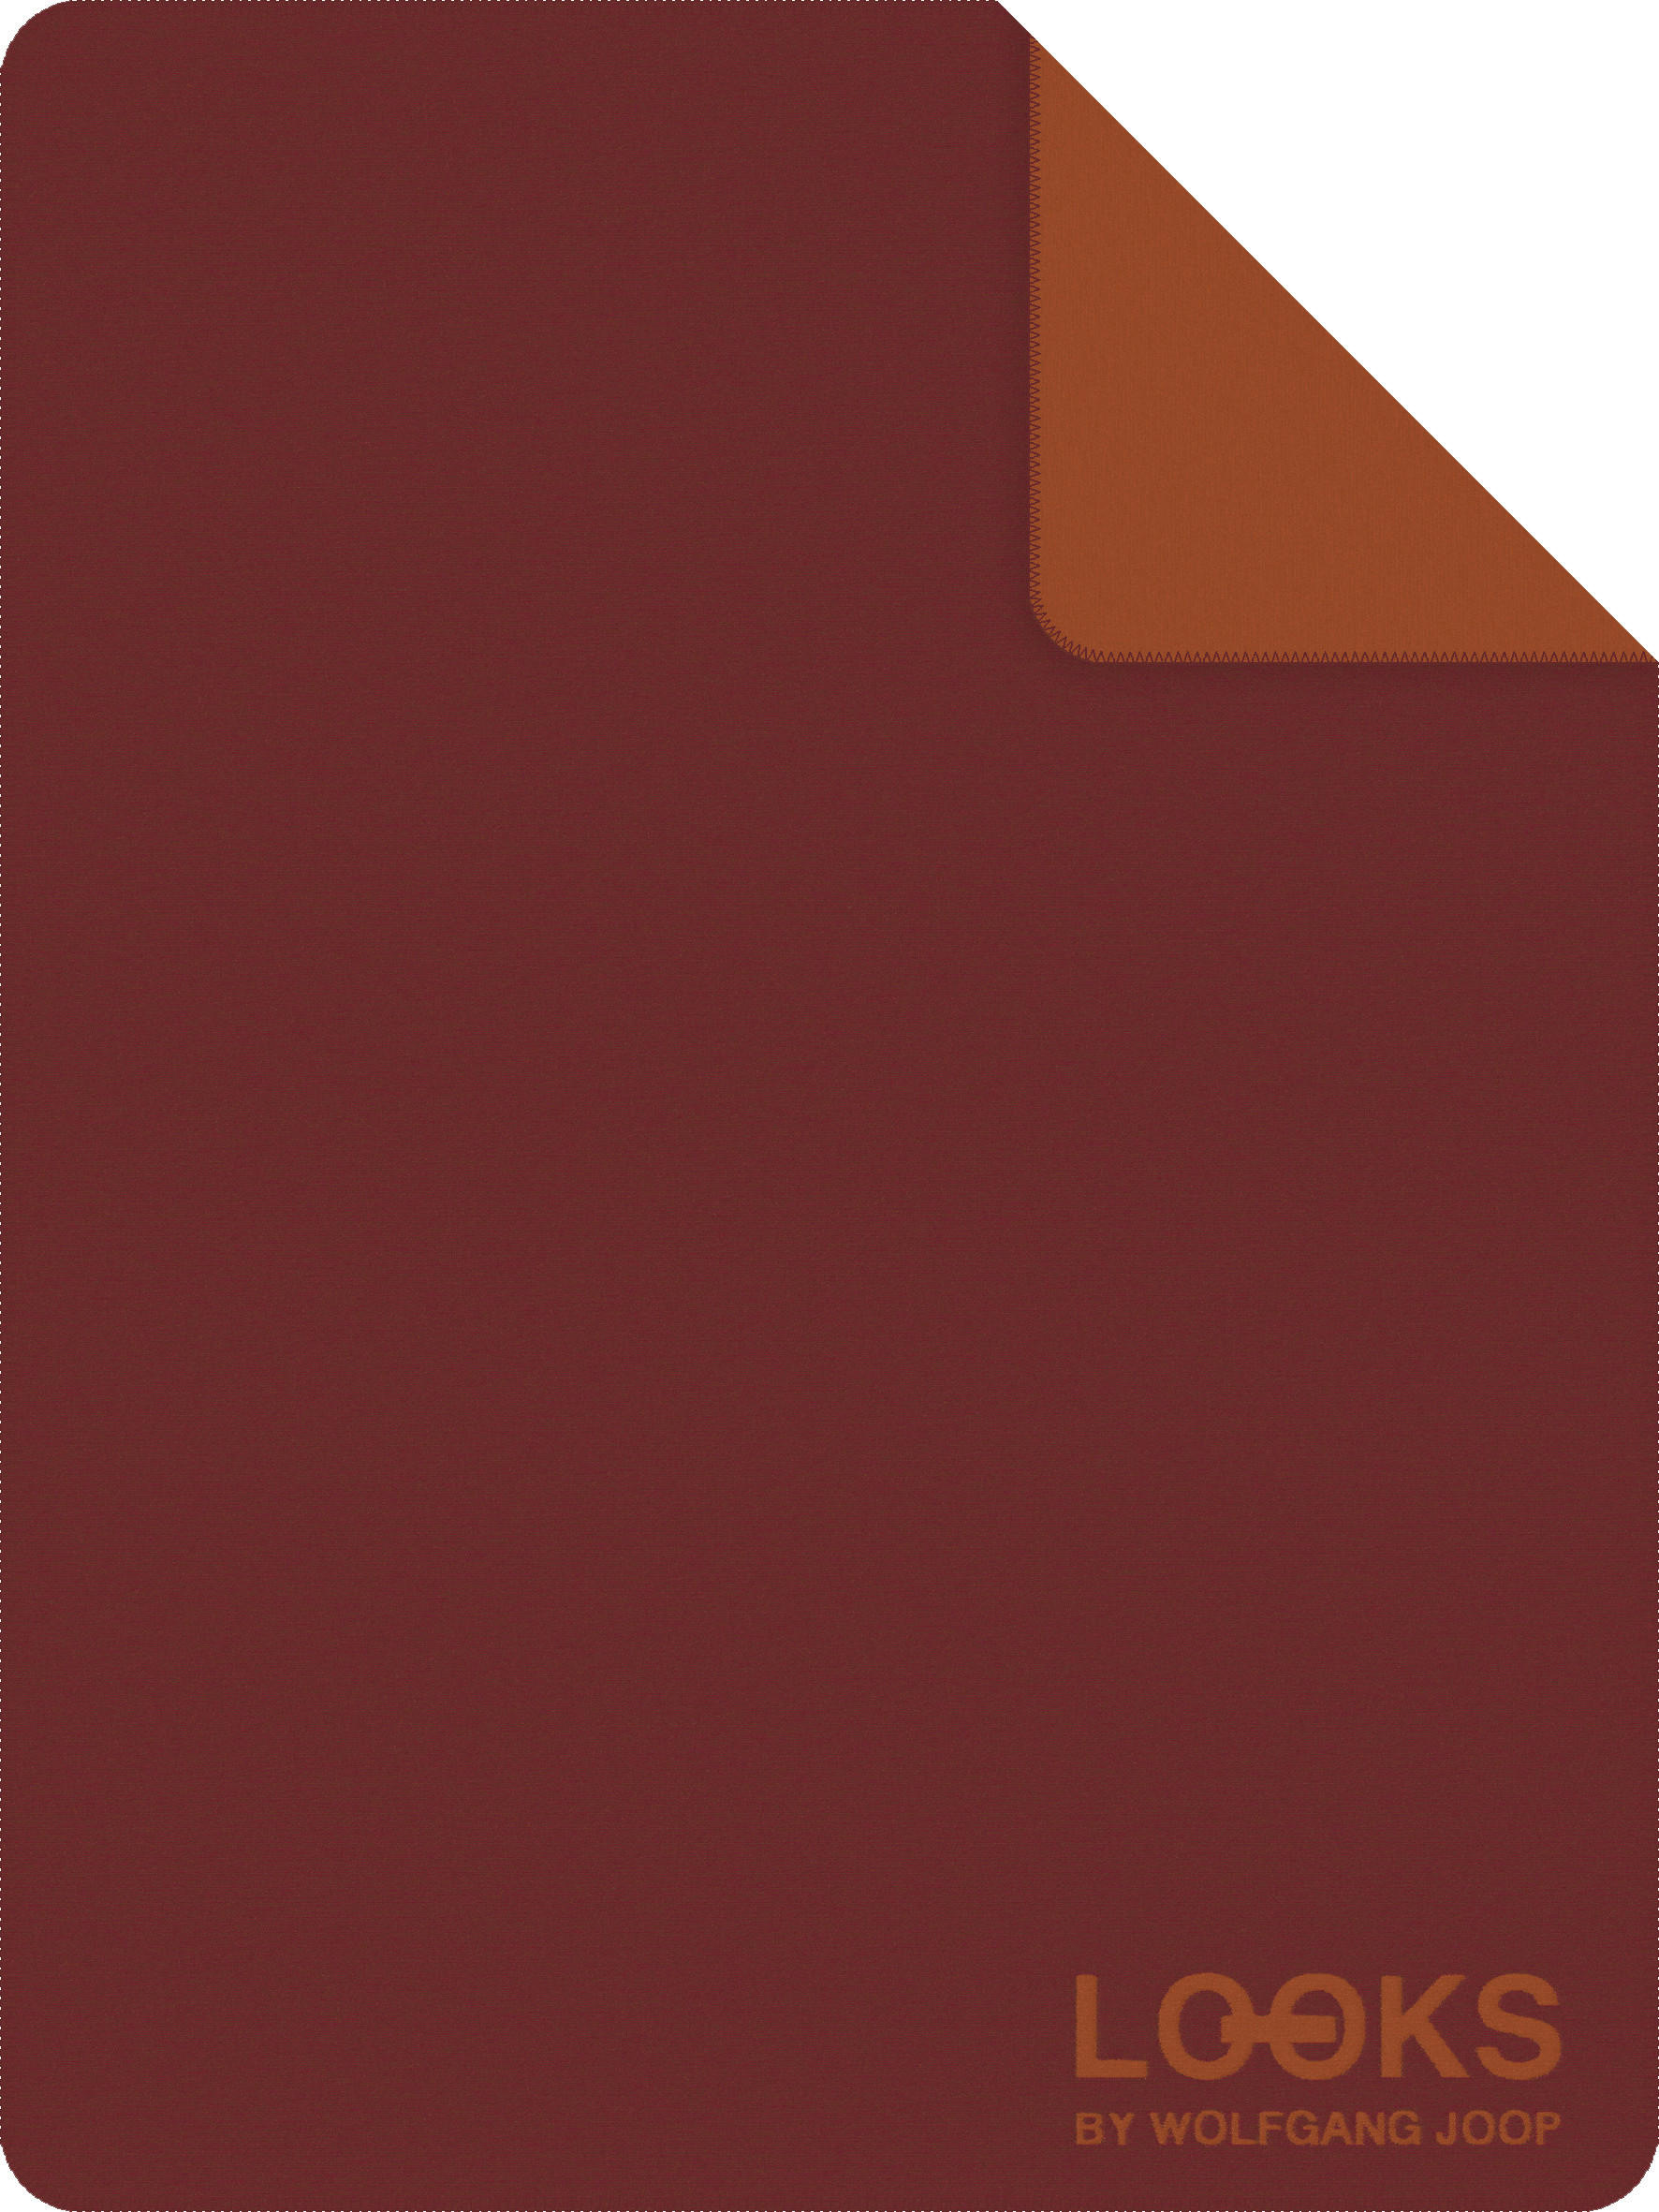 DECKE 2380 Doubleface 150/200 cm  - Rot/Orange, KONVENTIONELL, Textil (150/200cm) - LOOKS by W.Joop